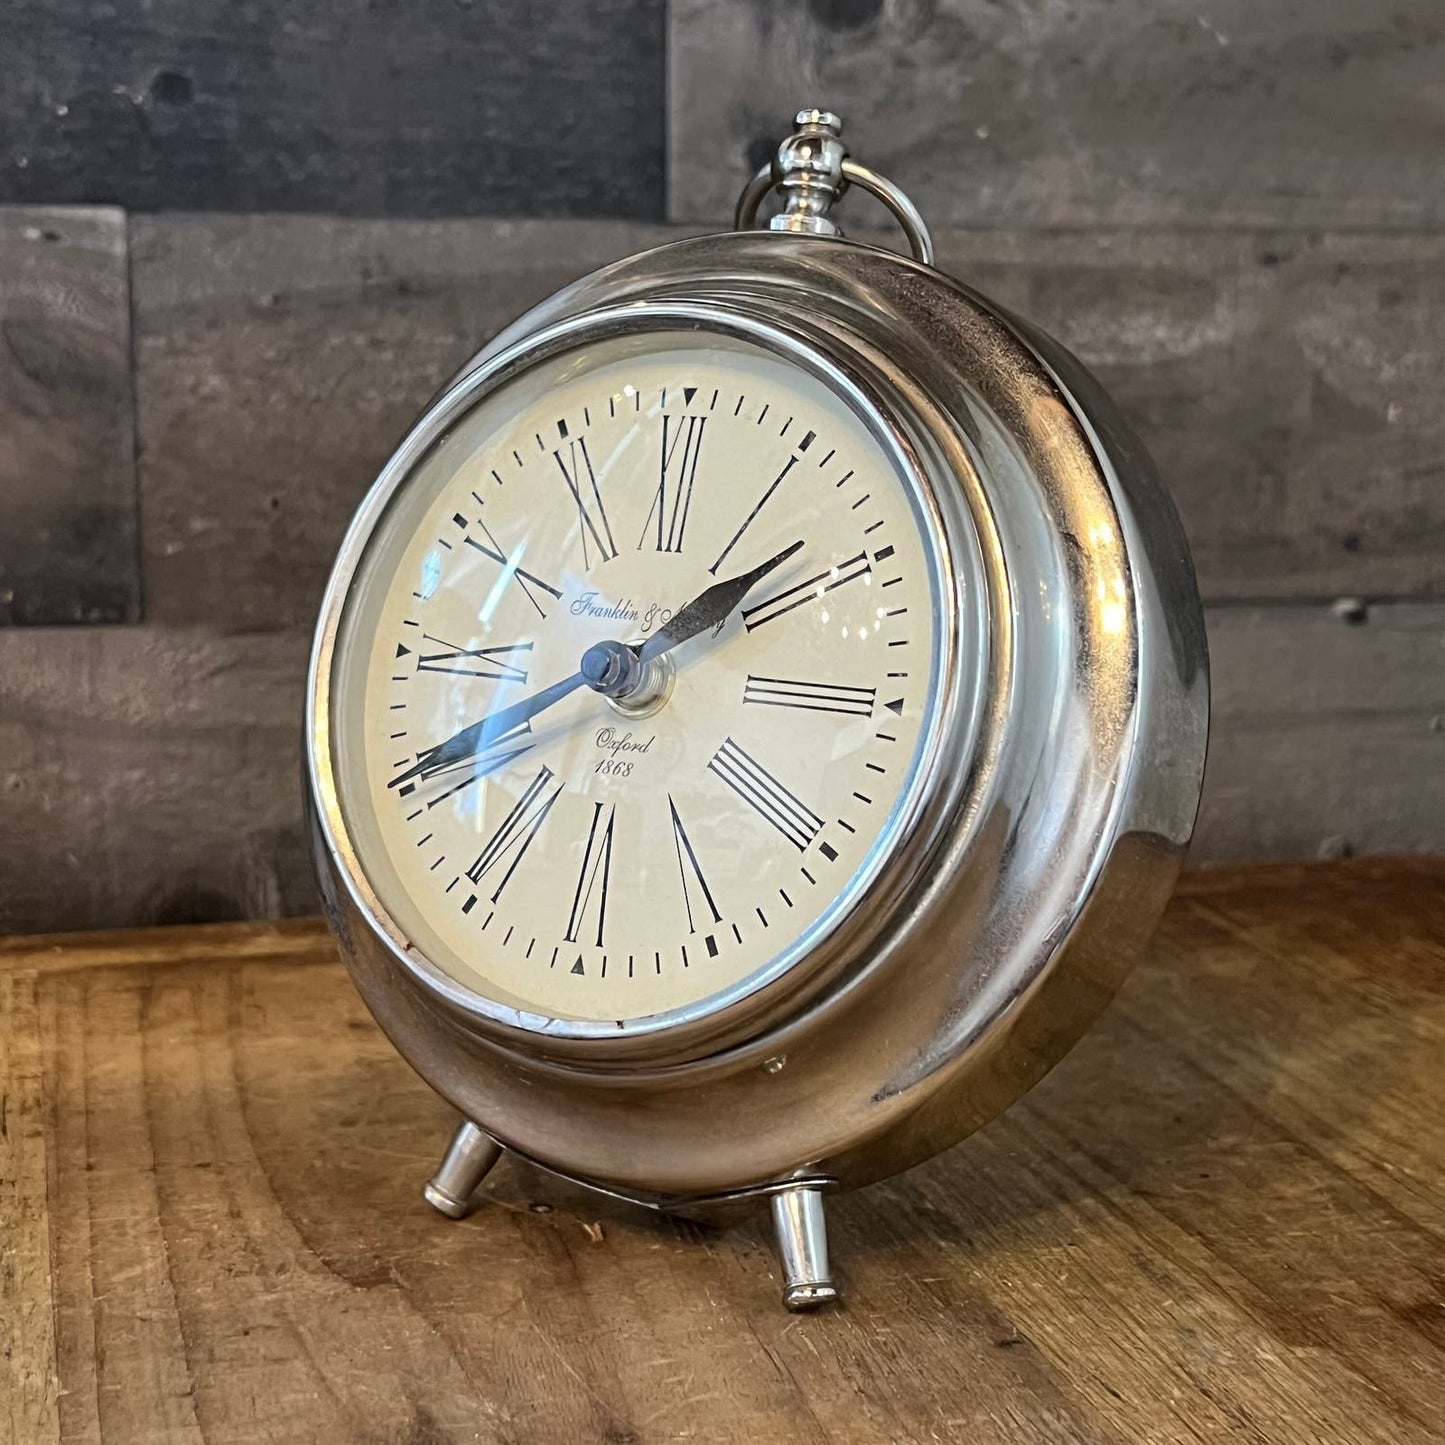 Franklin & Murphy Analog Silver Tone Mantle Clock - Table Clock - Shelf Clock